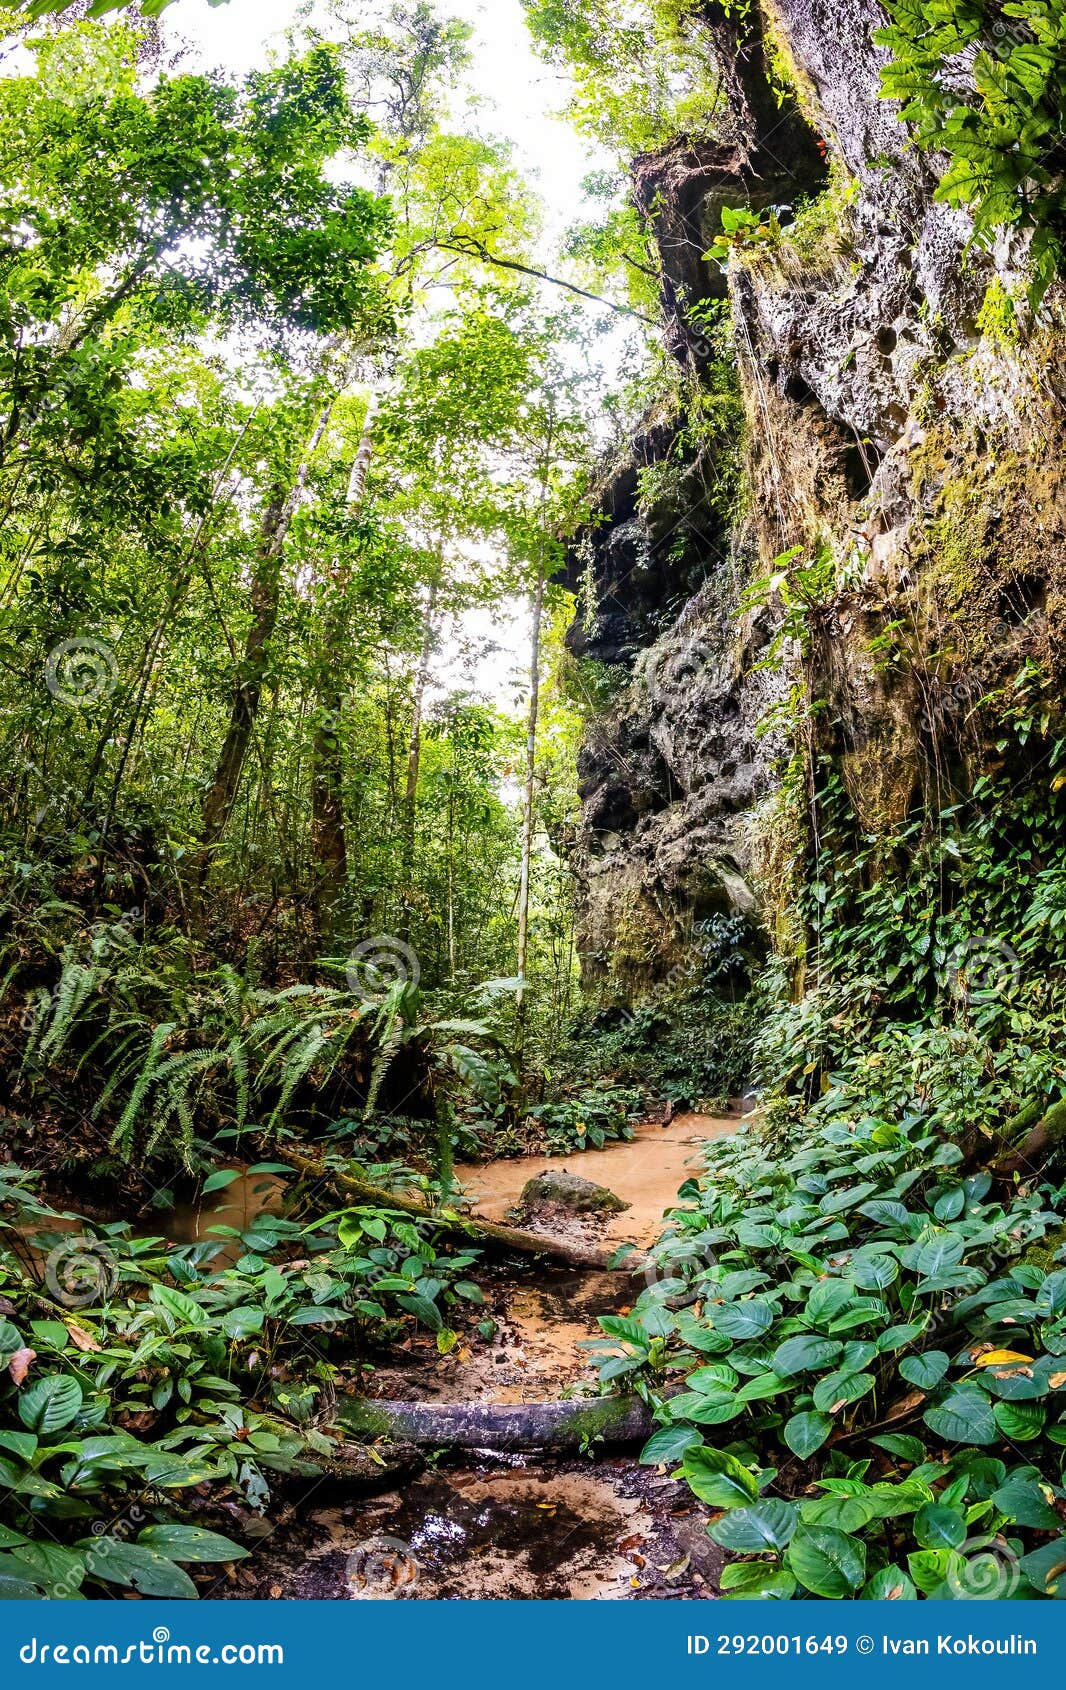 view of maroaga cave in jungle at presidente figueiredo brazil